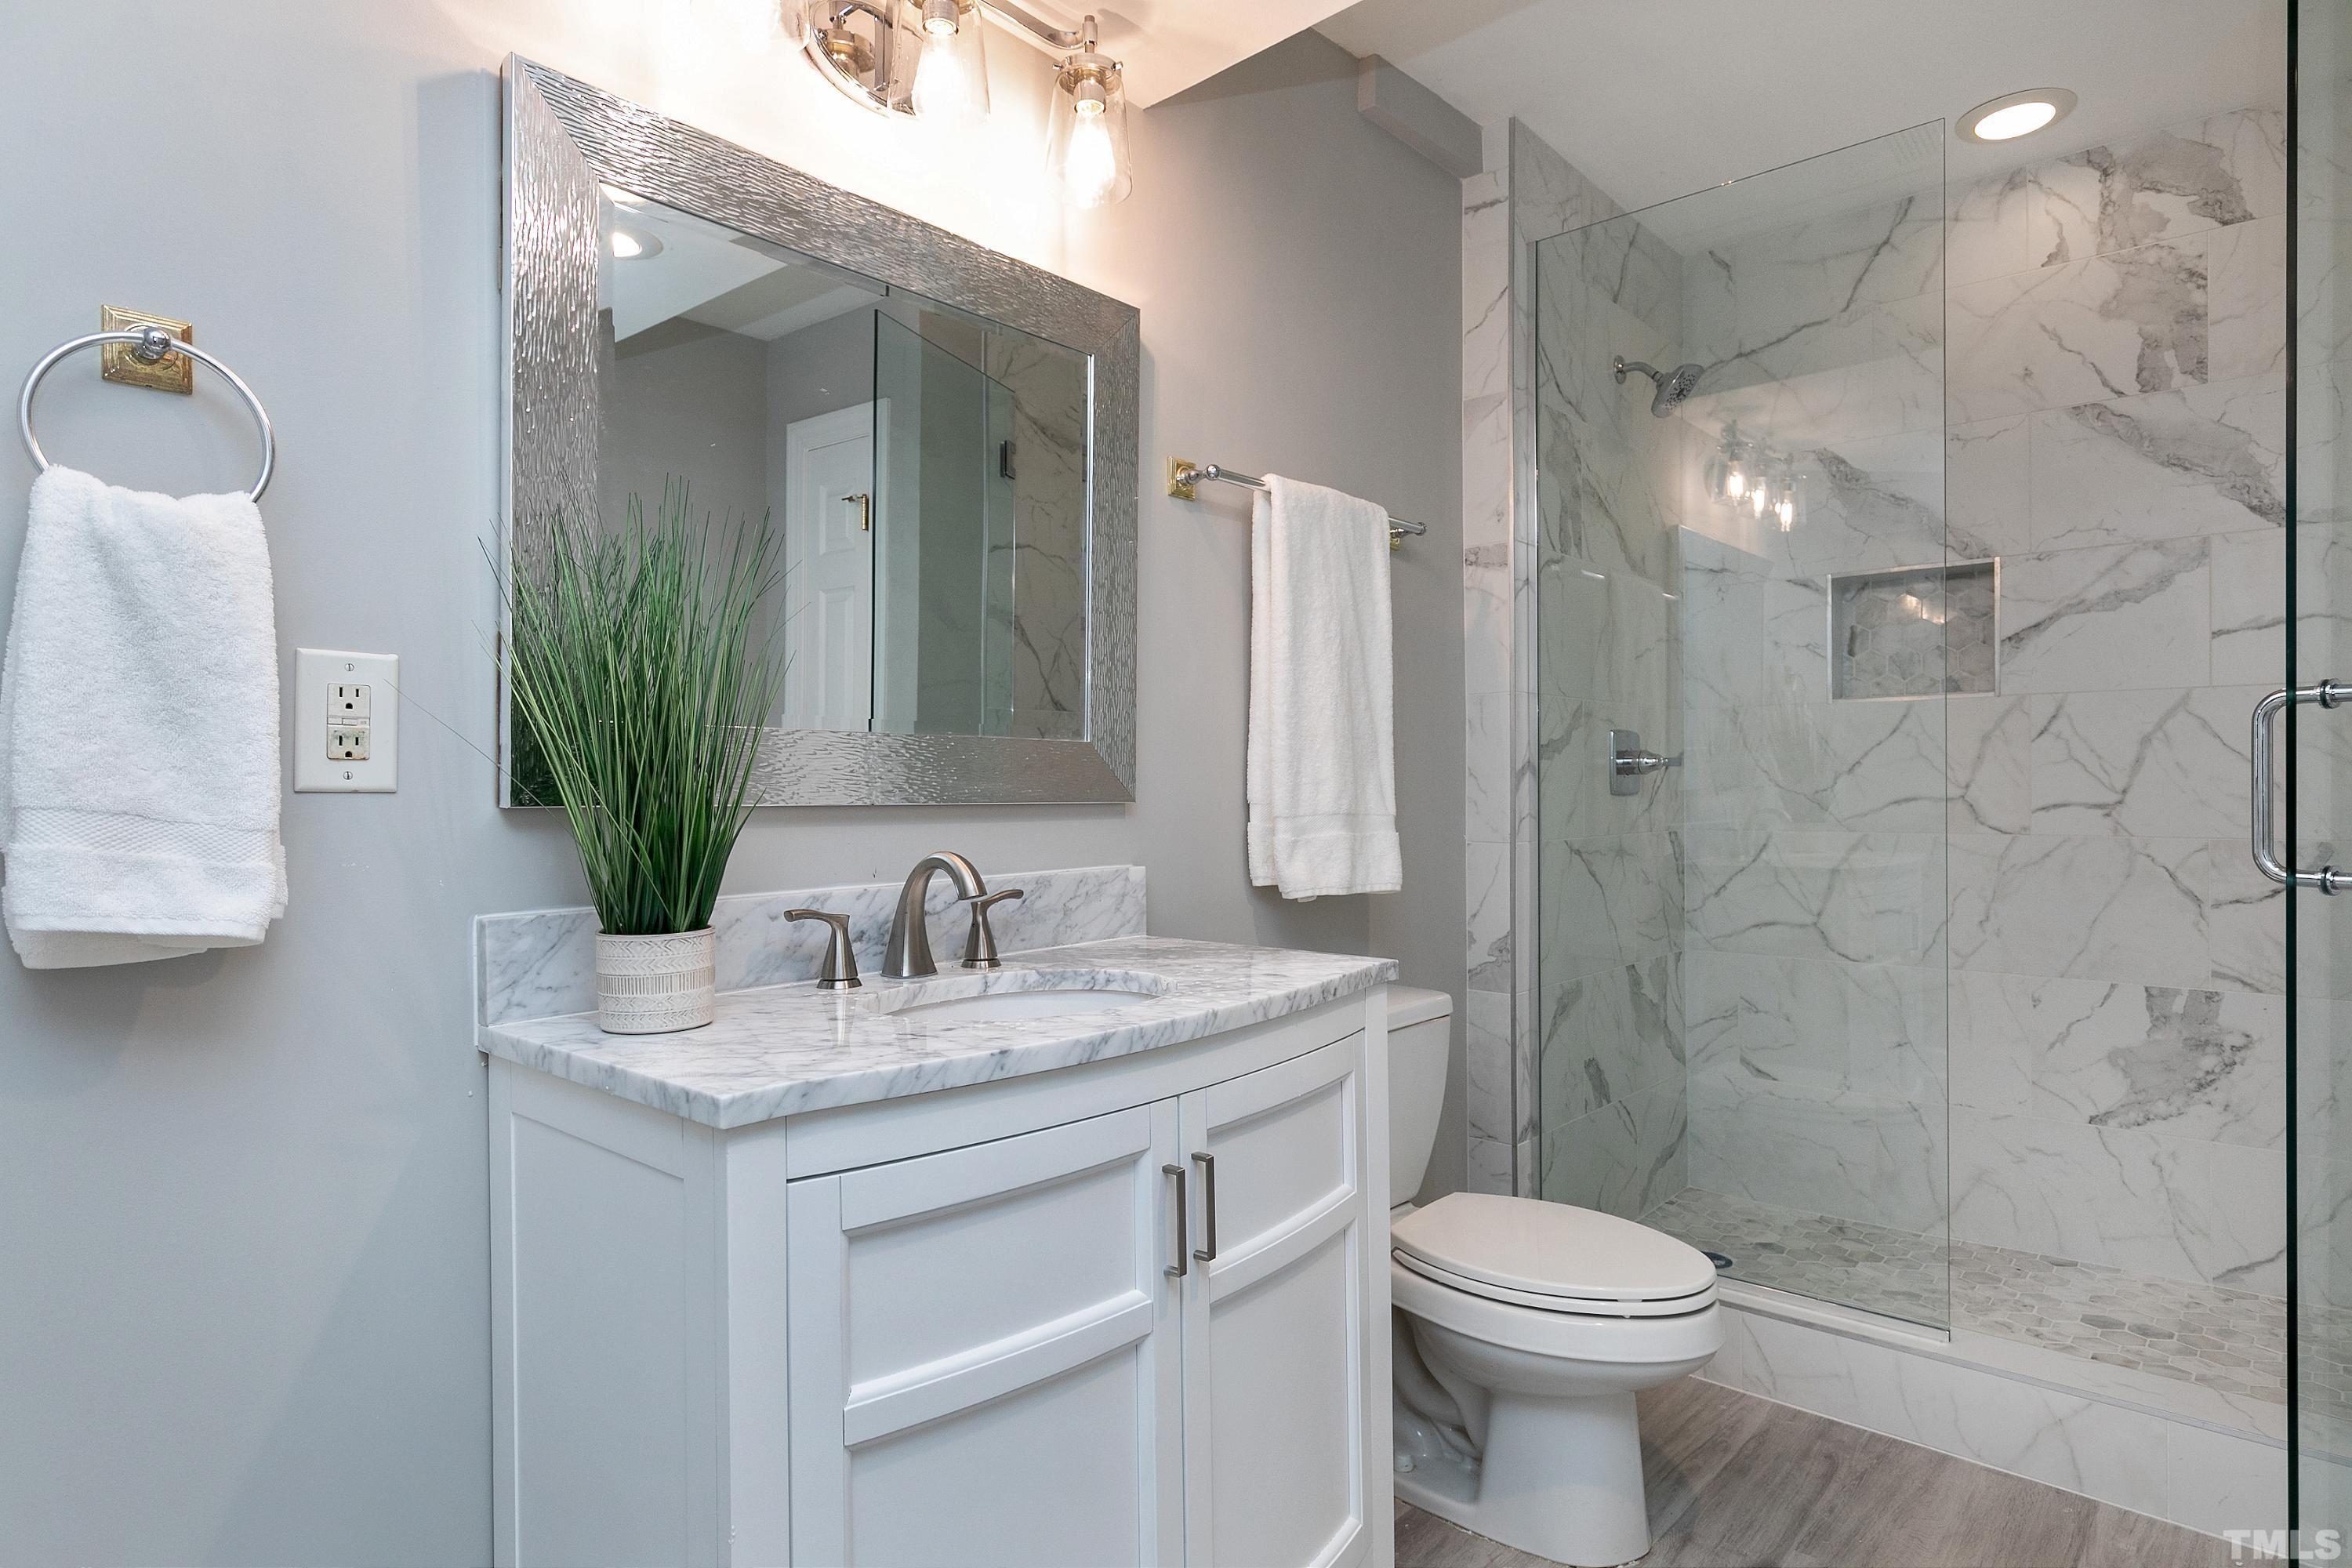 NEWLY RENOVATED FULL BATH with tiled walk in shower, new vanity & luxury vinyl plank floor.